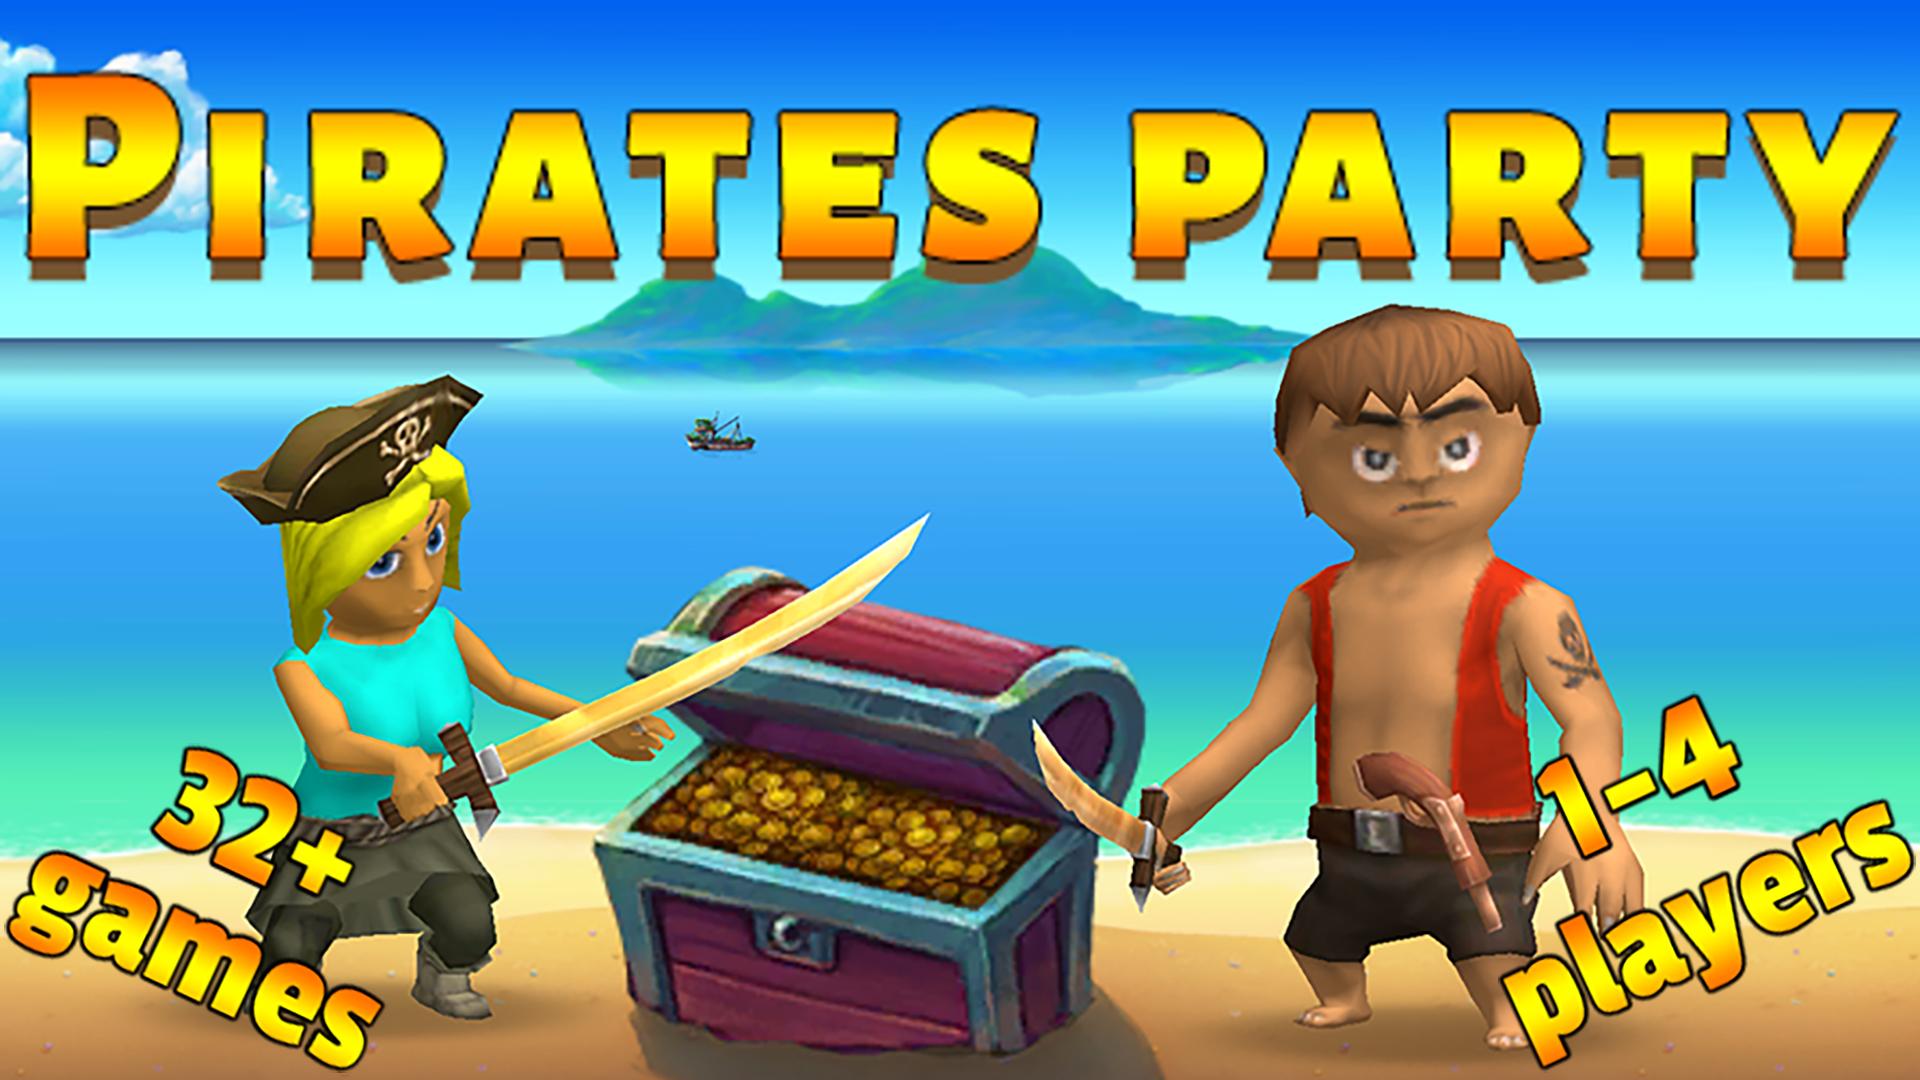 Pirates party: 2 3 4 players 2.17 Screenshot 1